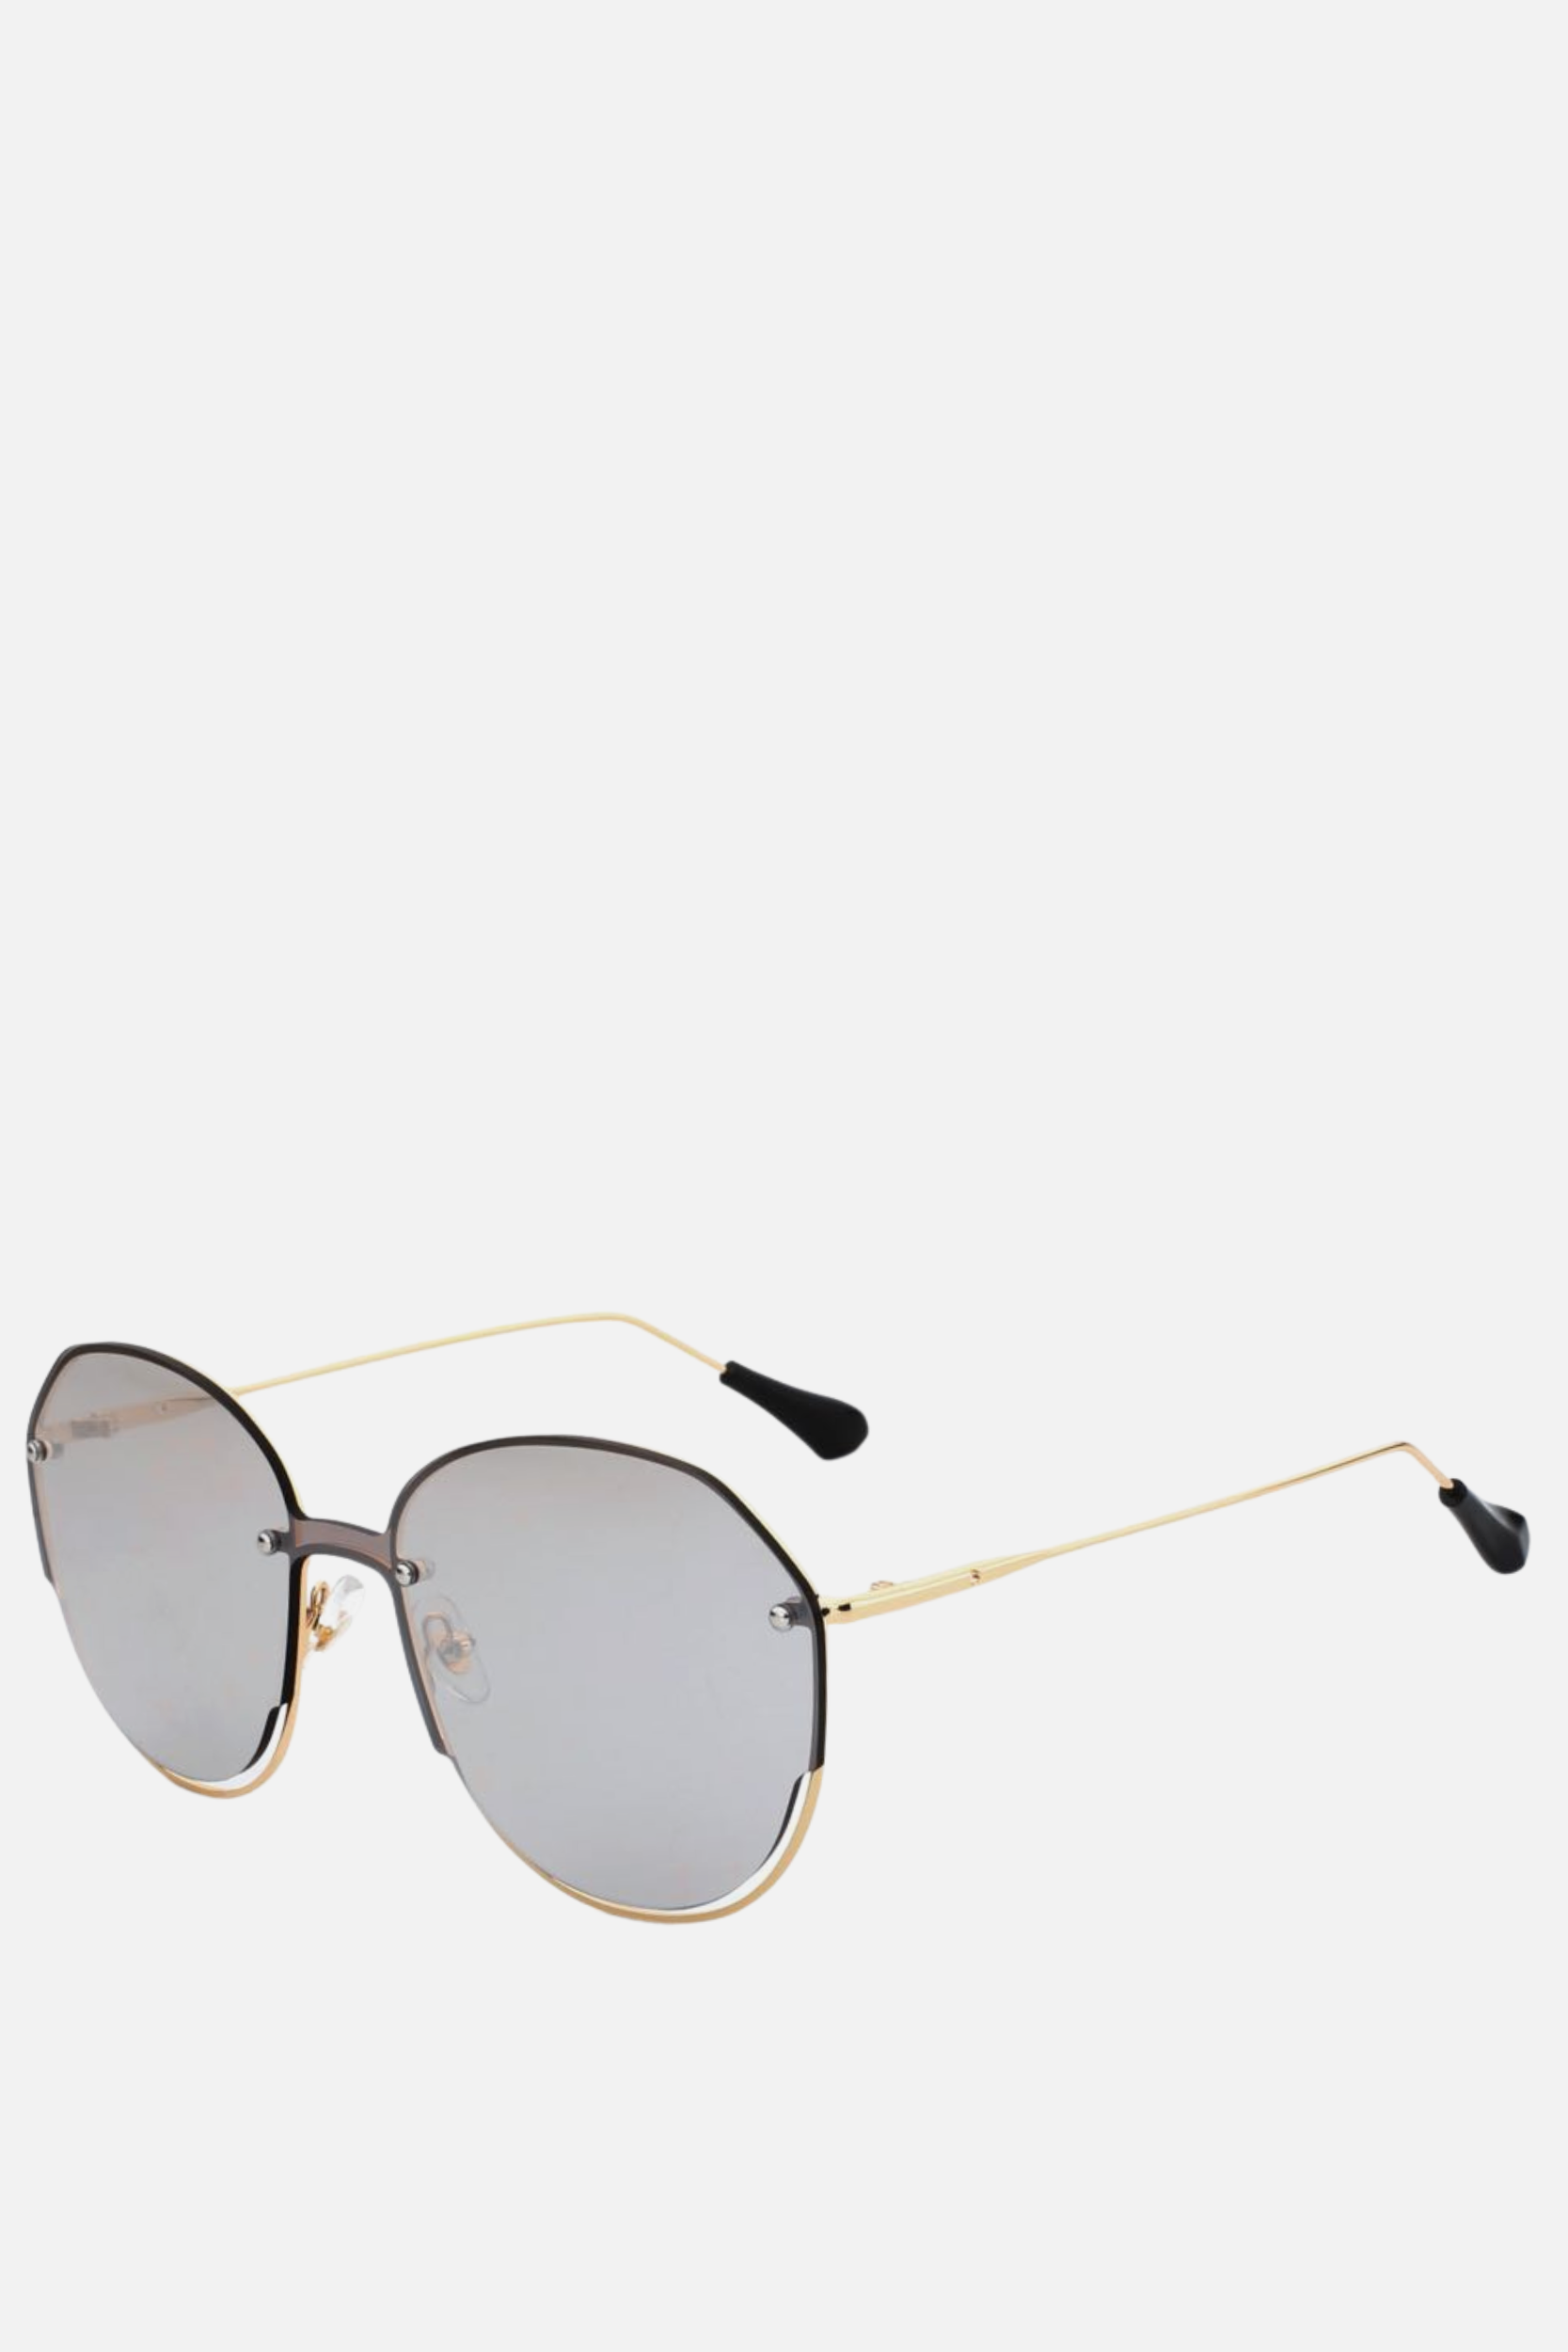 Buy VAST Retro Round Sunglasses For Men And Women (Gold Silver Mirror)  Online